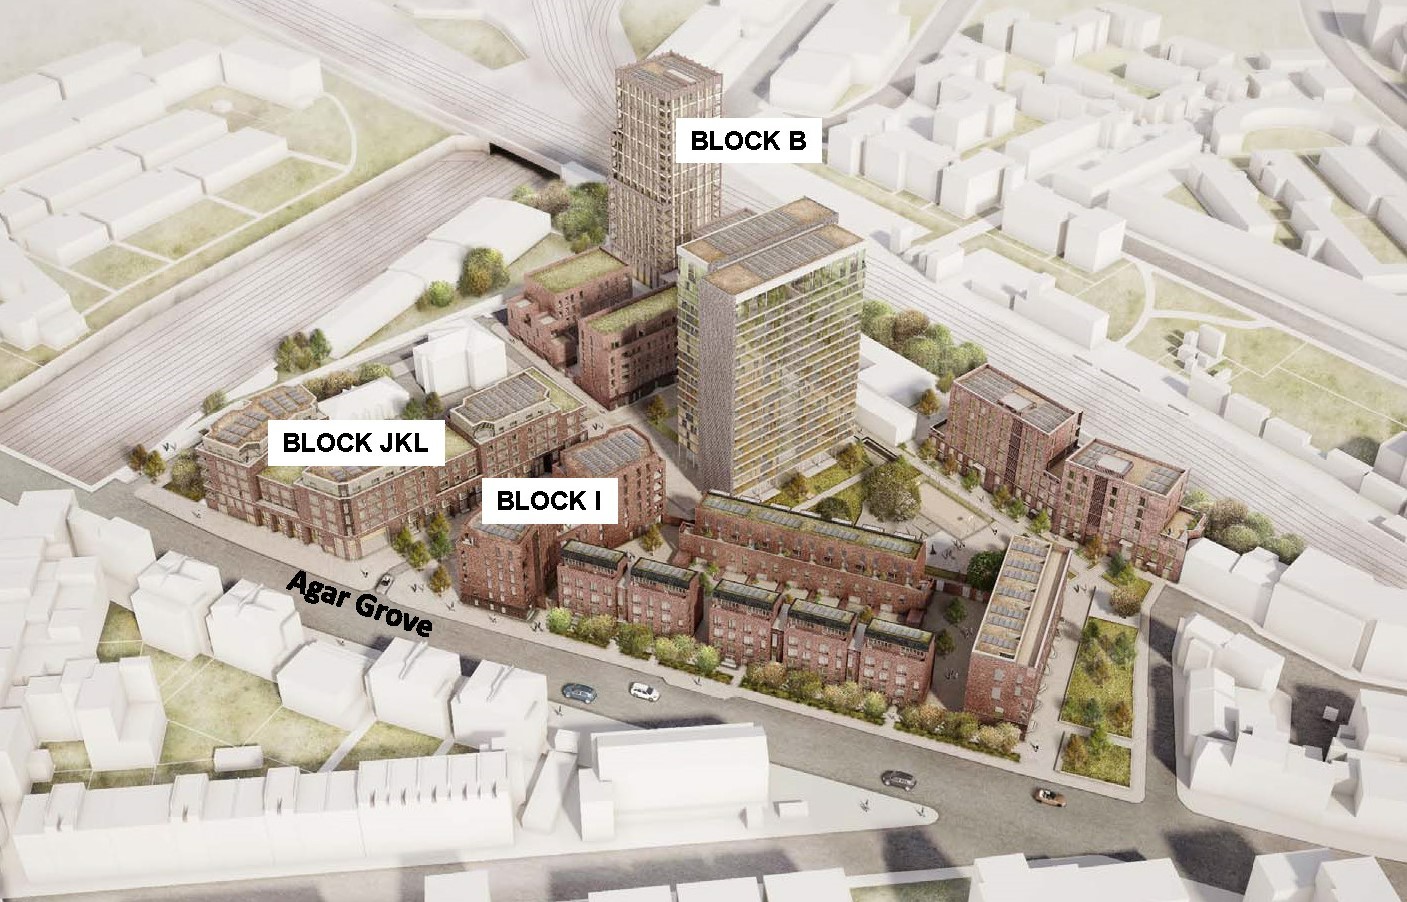 Computerised image showing Block I and Block JKL buildings